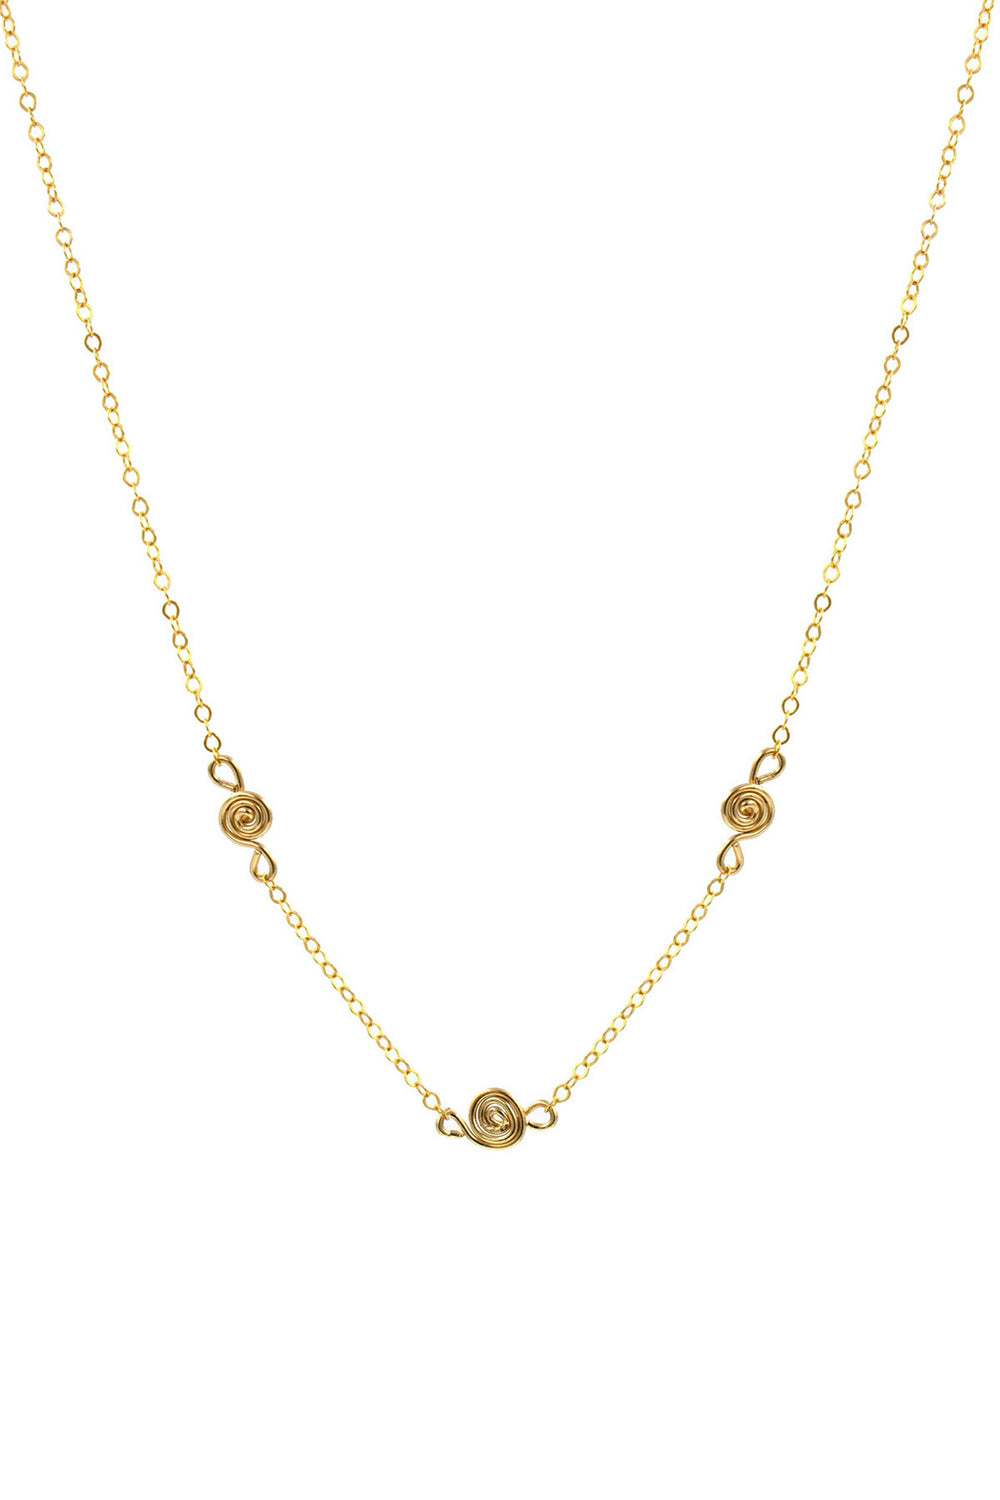 Gold Spiral Necklace